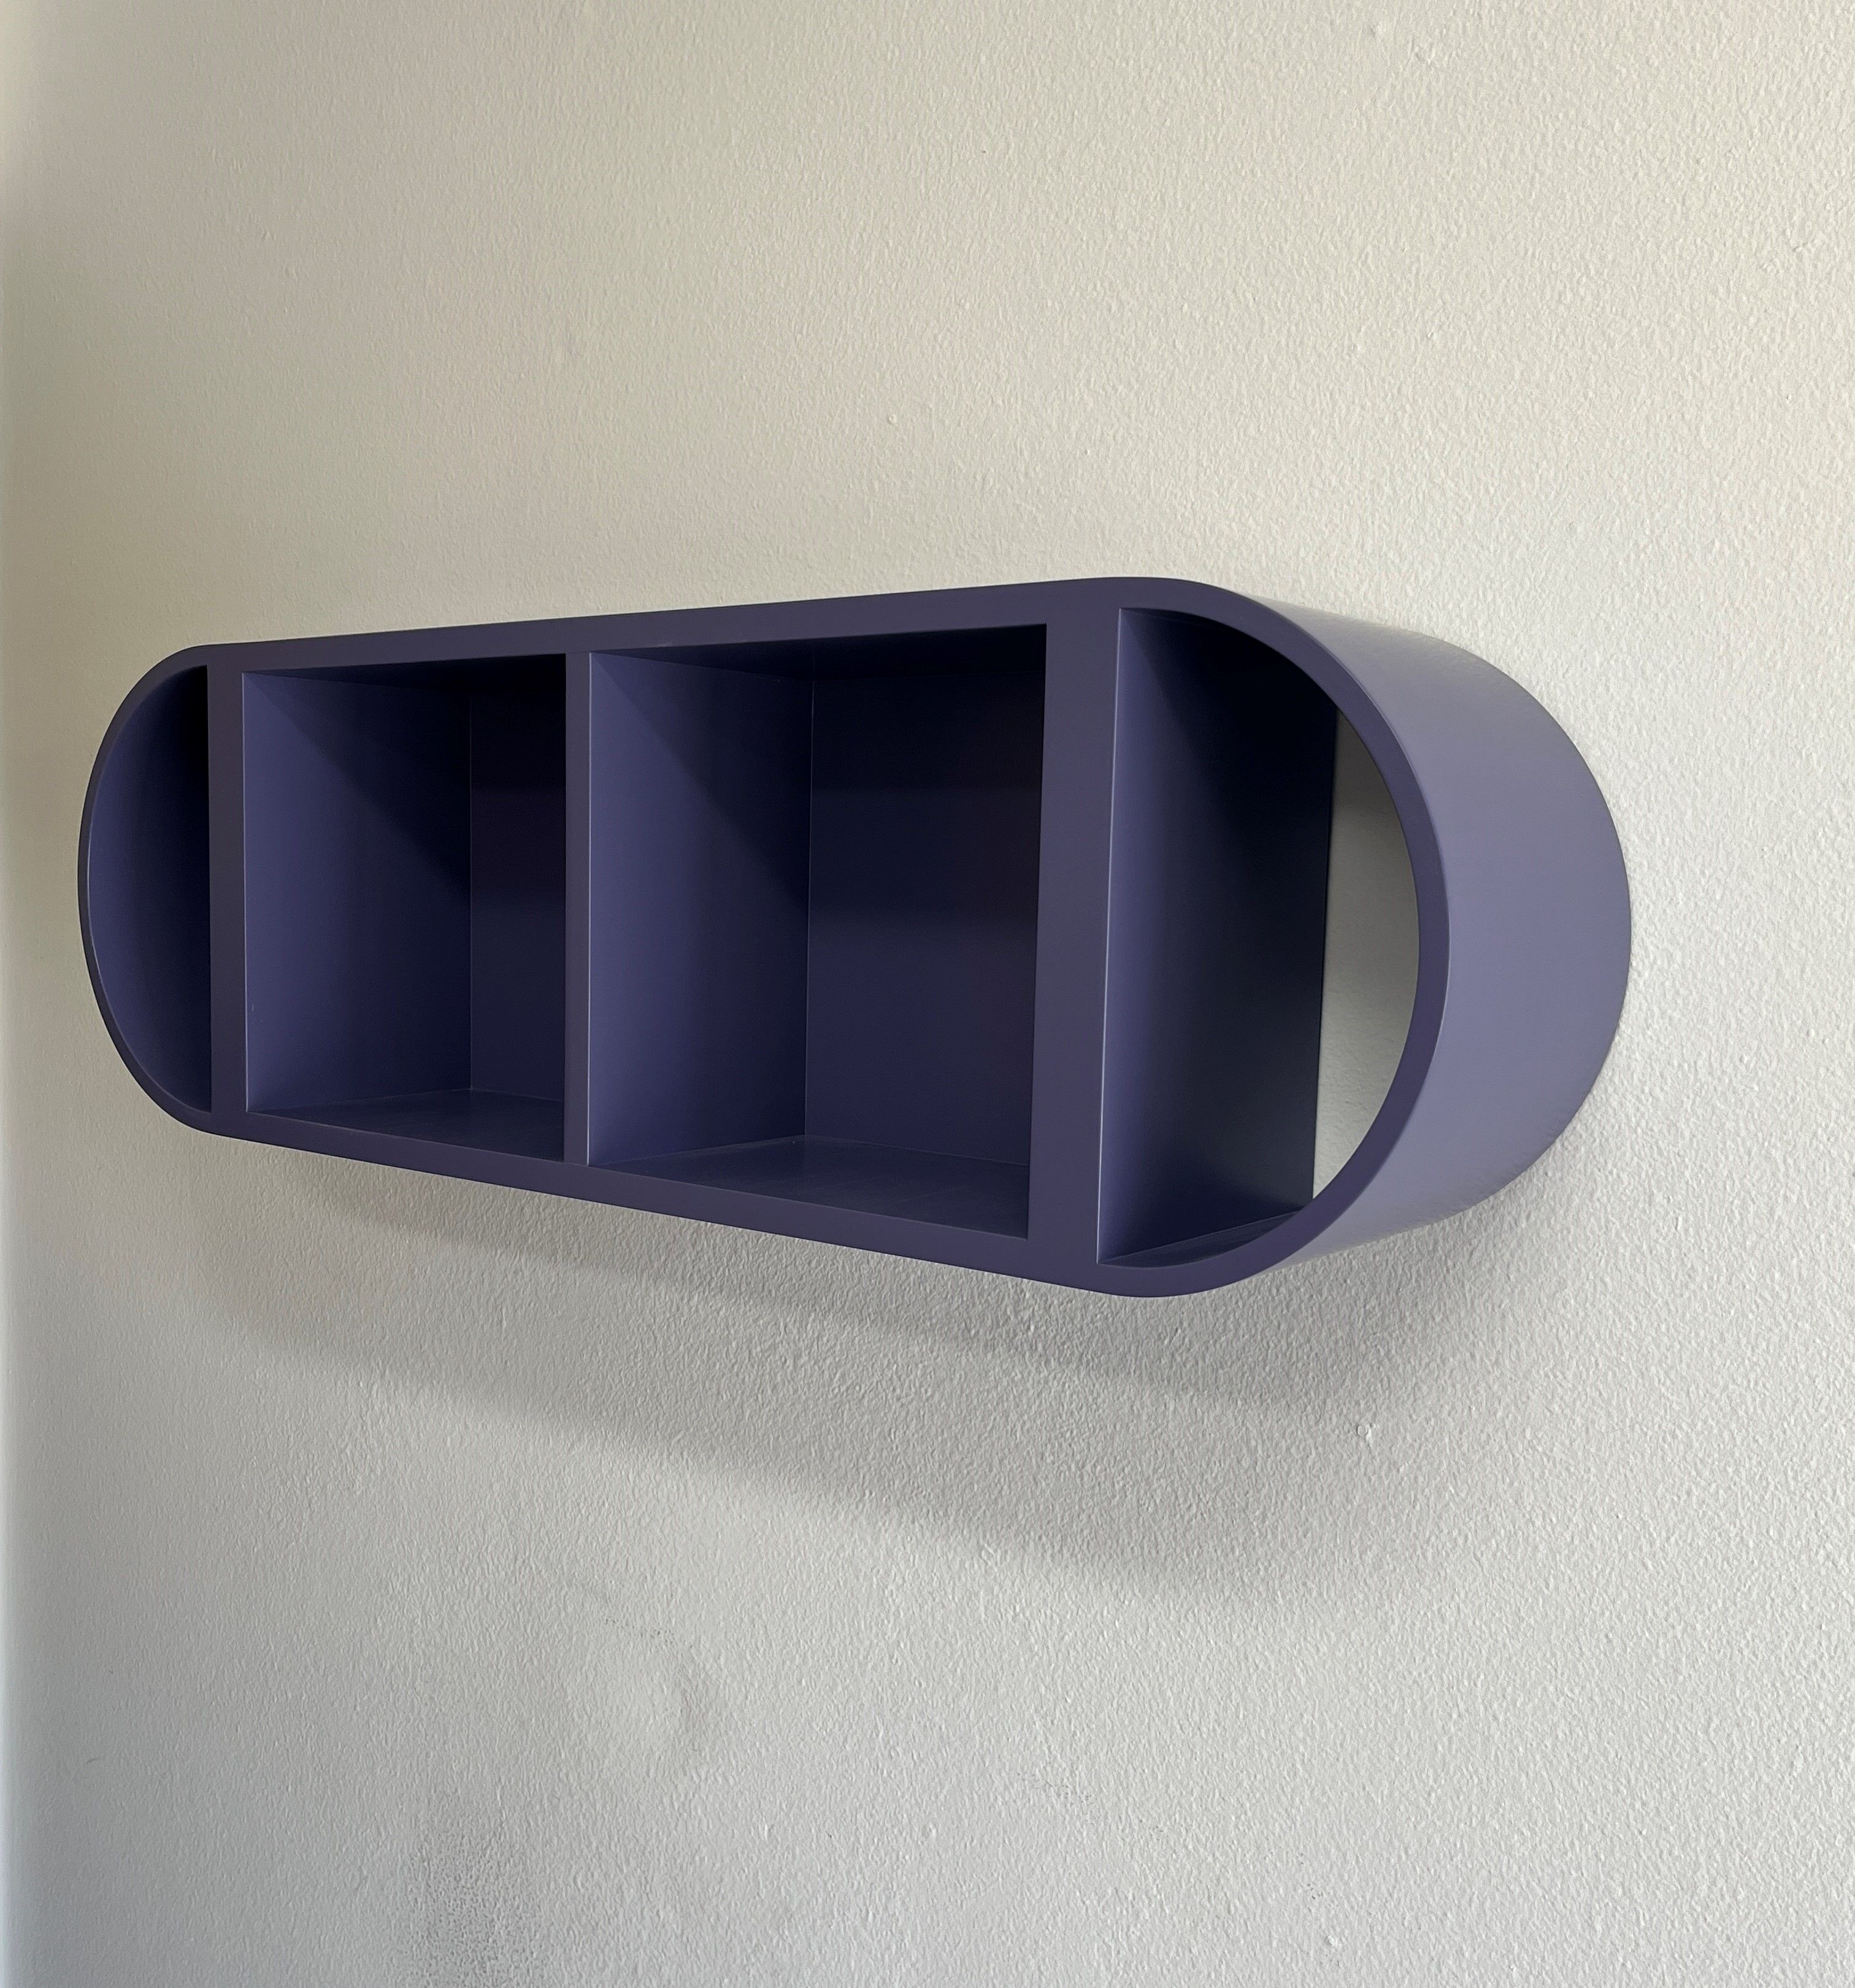  Wall Hanging Shelf - Purple product image 0